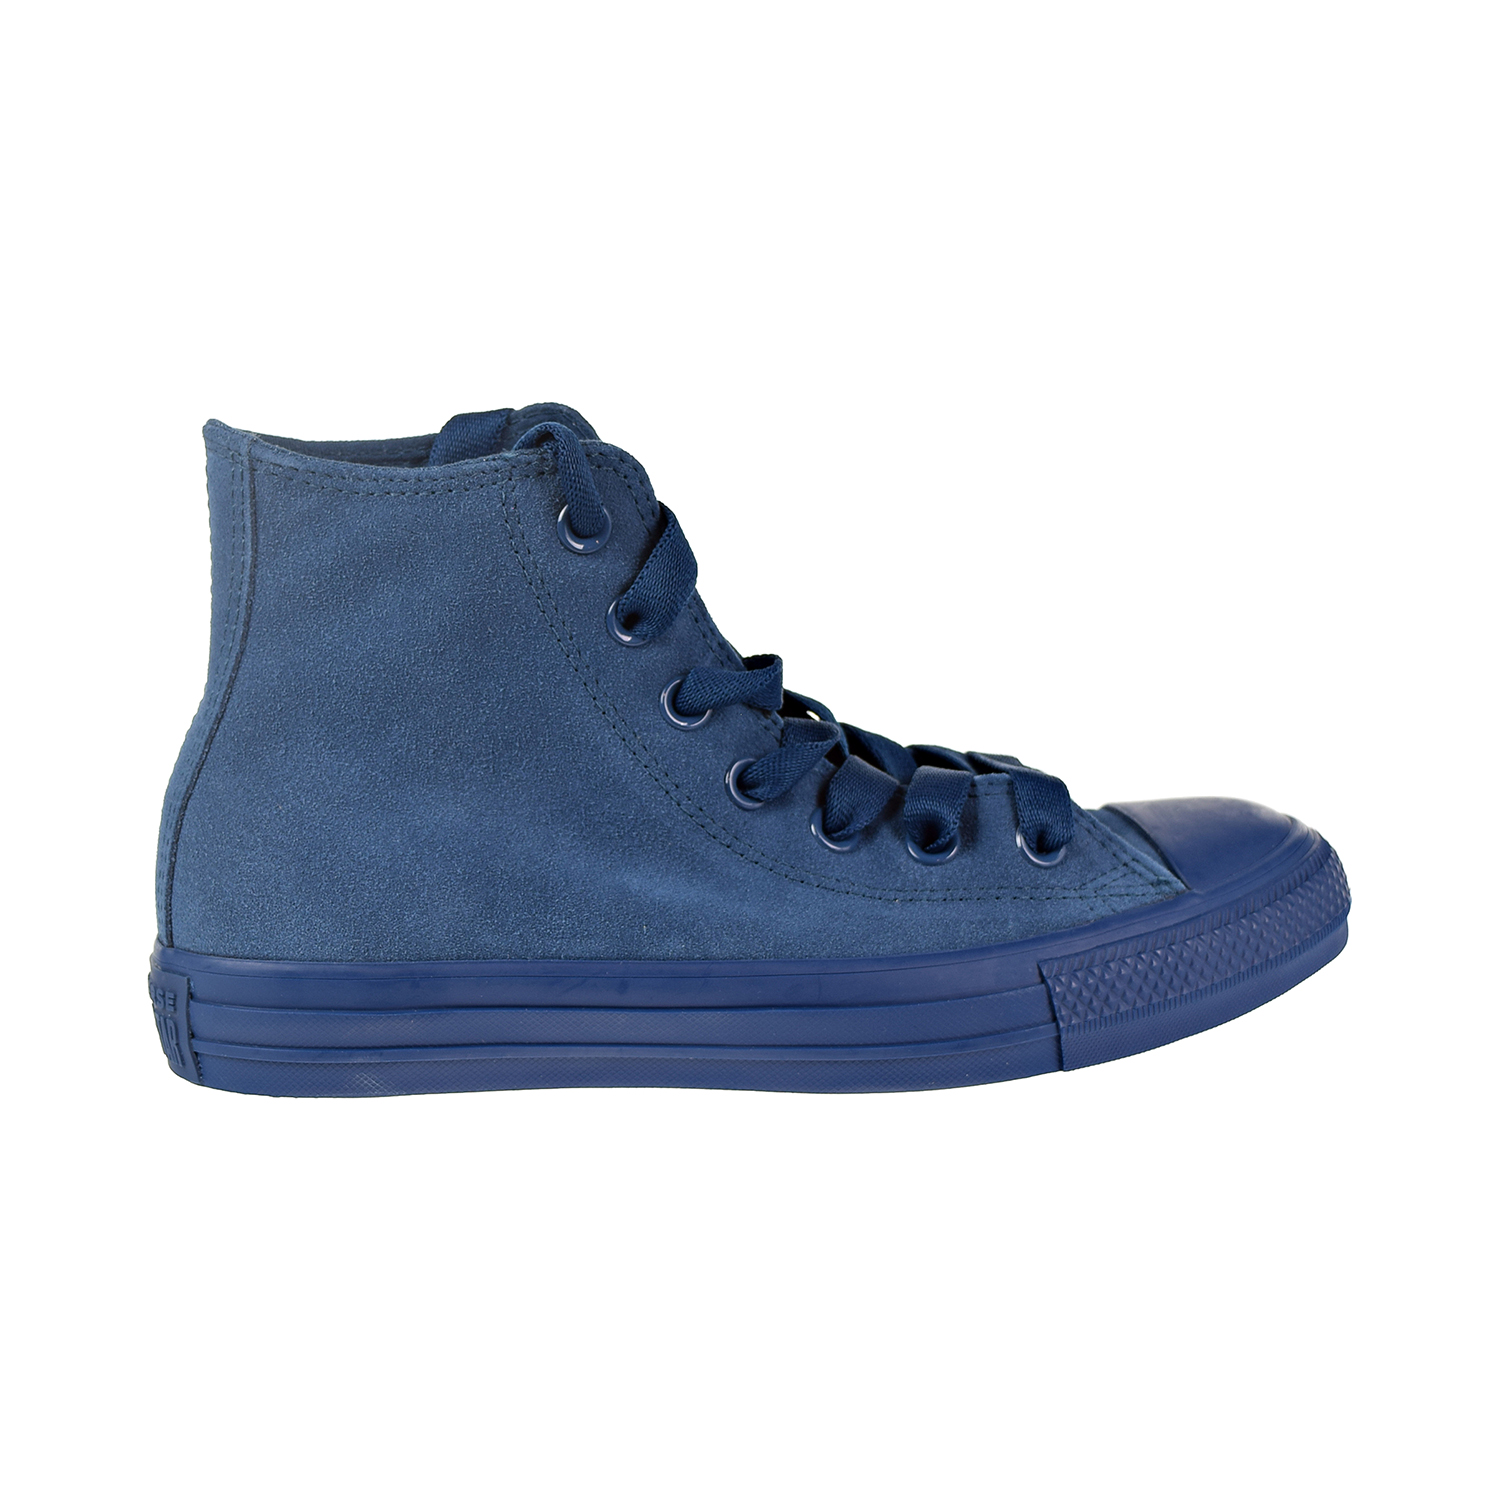 Converse Chuck Taylor All Star Hi Big Kids'-Men's Shoes Blue Fir Suede  162463c | eBay